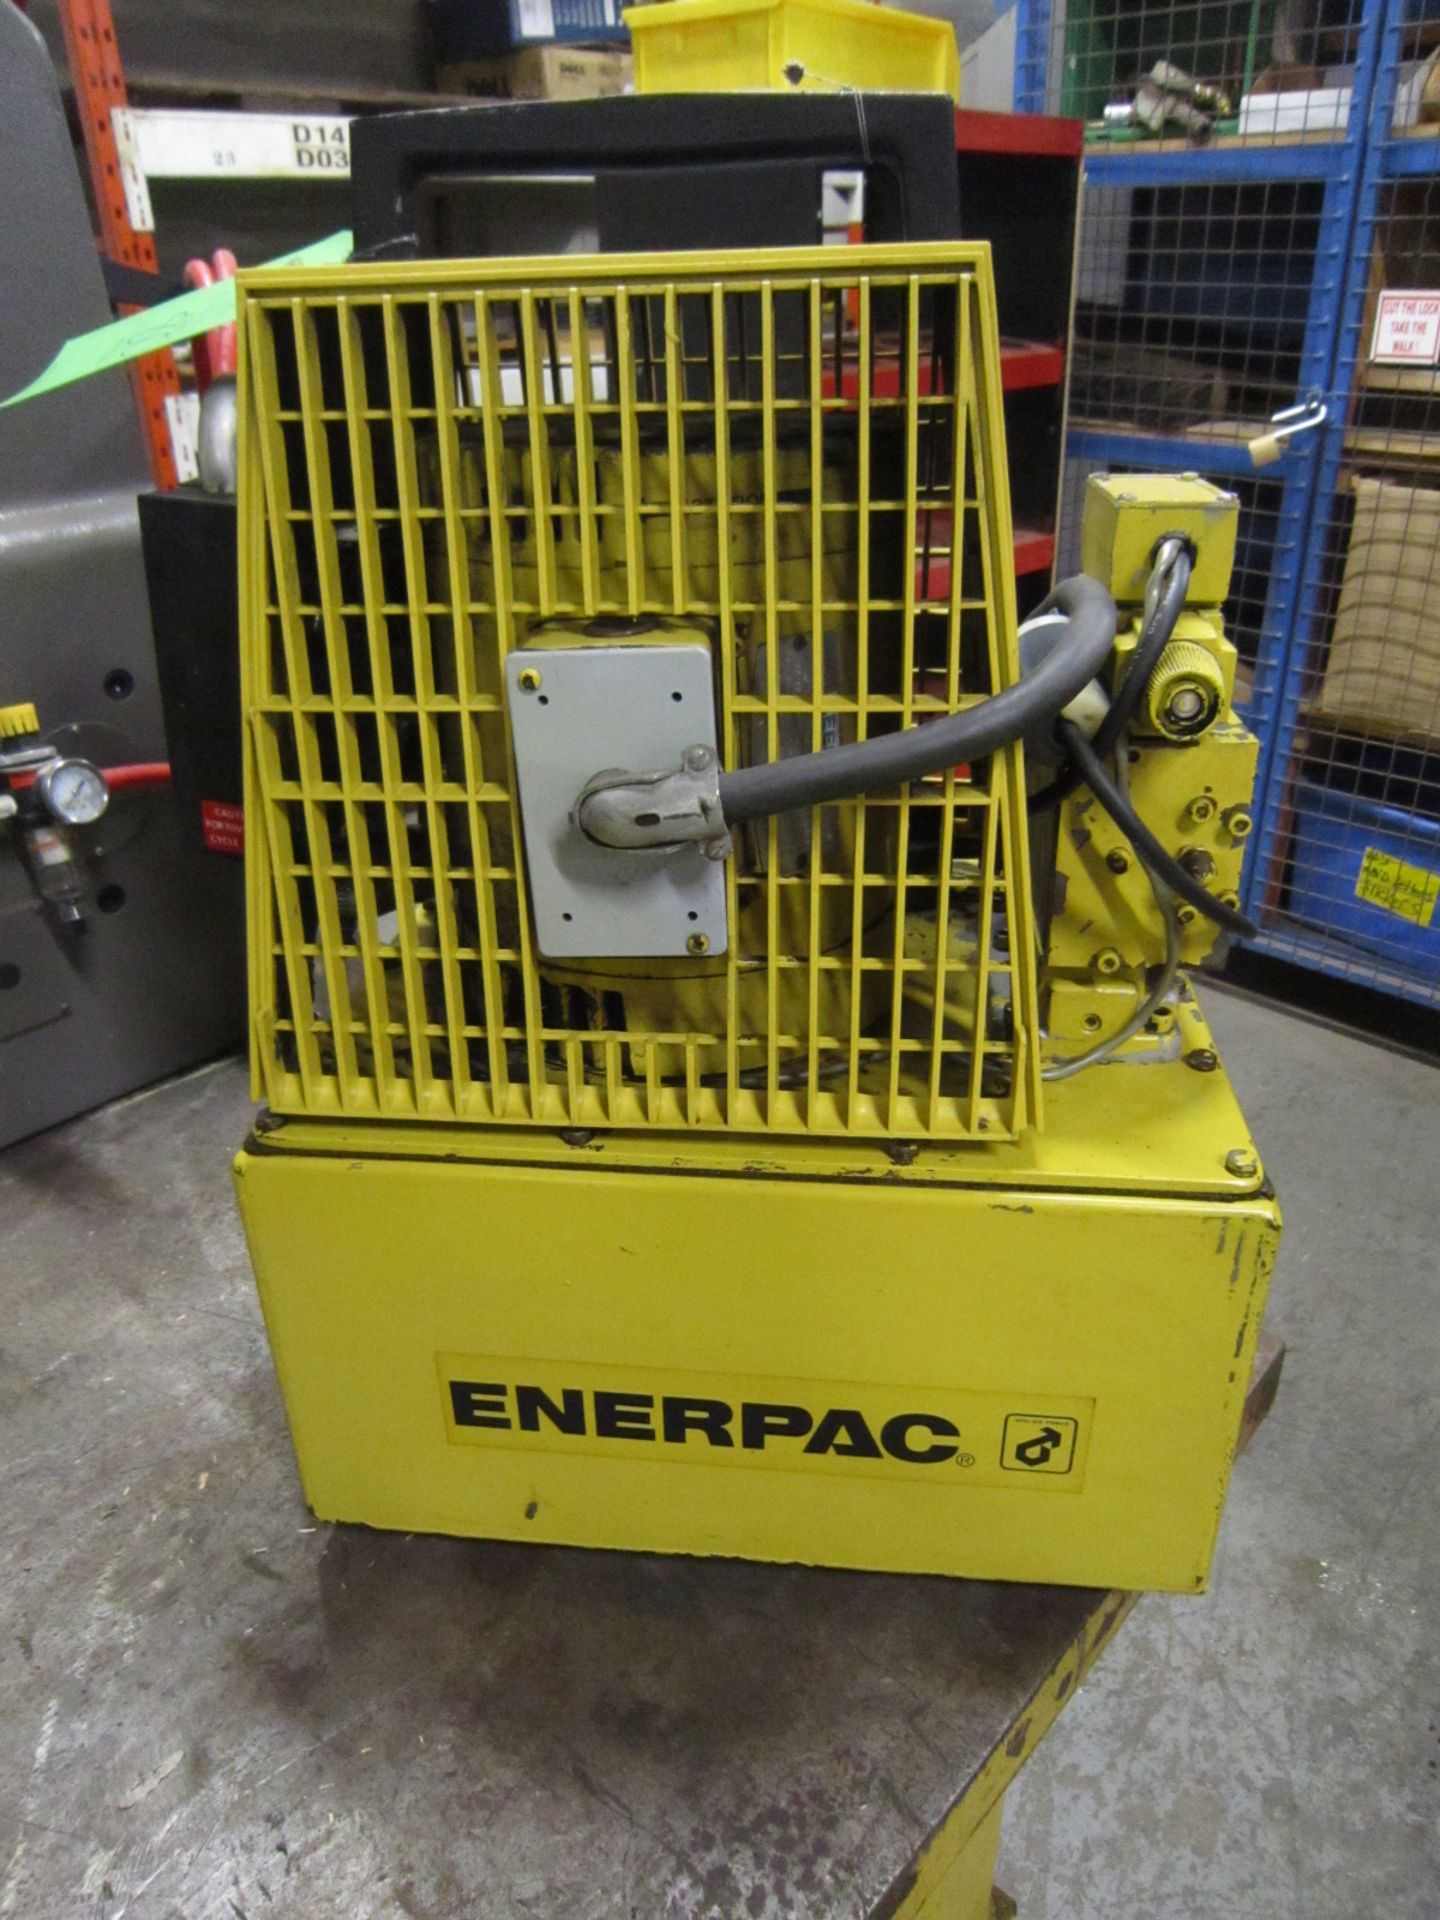 Enerpac Hydraulic Powerpack Pump - Hushh Pump 10000 psi 1.5HP 230V 3 phase - Image 2 of 2